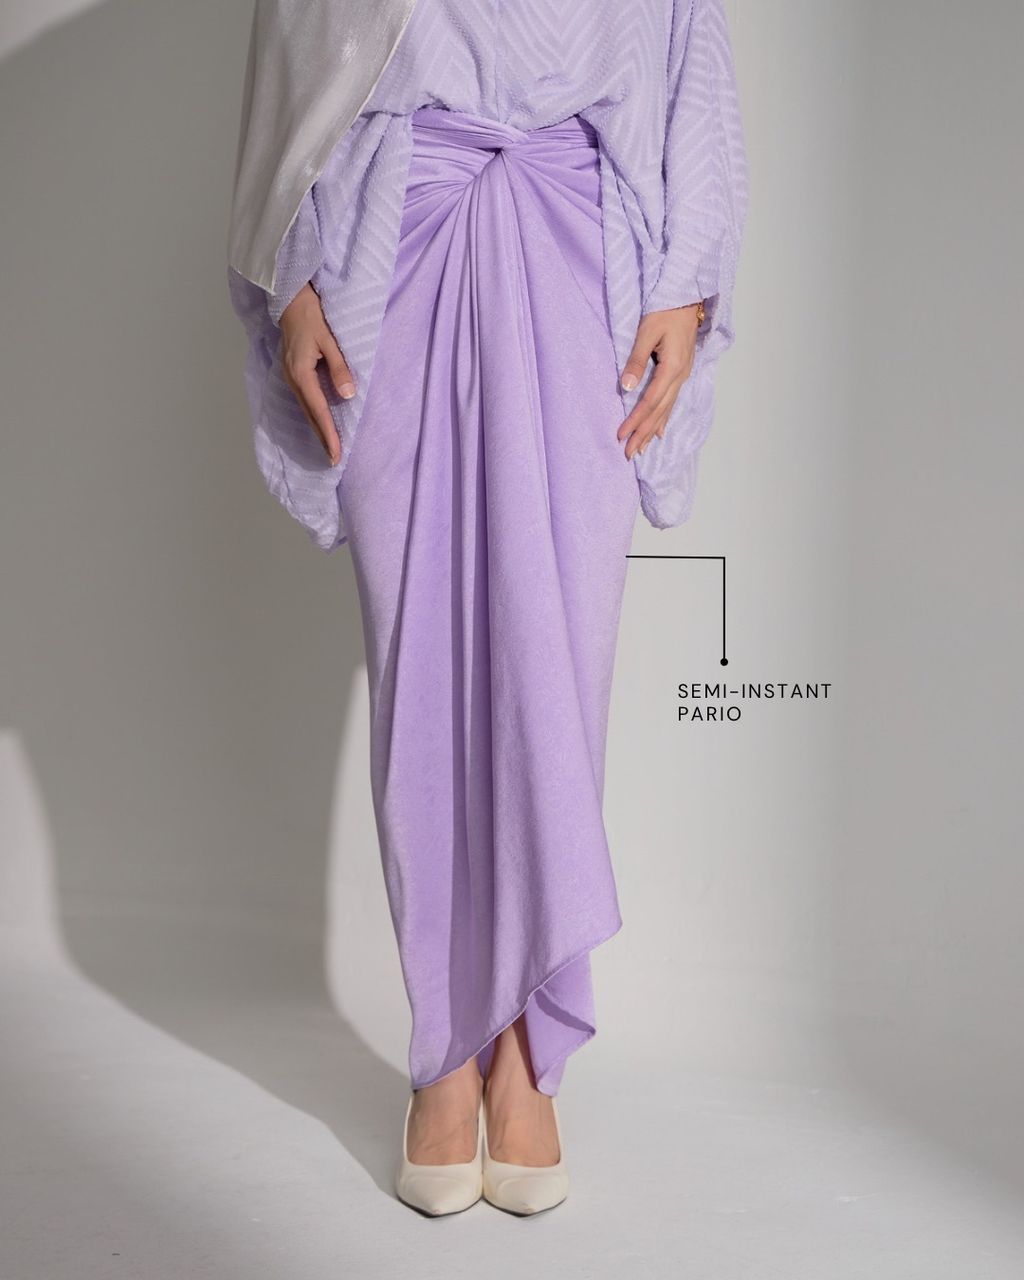 haura-wear-amra-skirt-set-sulam-embroidery-pario-klasik-tradisional-mini kebaya-fabrik eyelet-raya-muslimah-long-sleeve-baju-skirt-kain-perempuan-baju-sepasang (14)